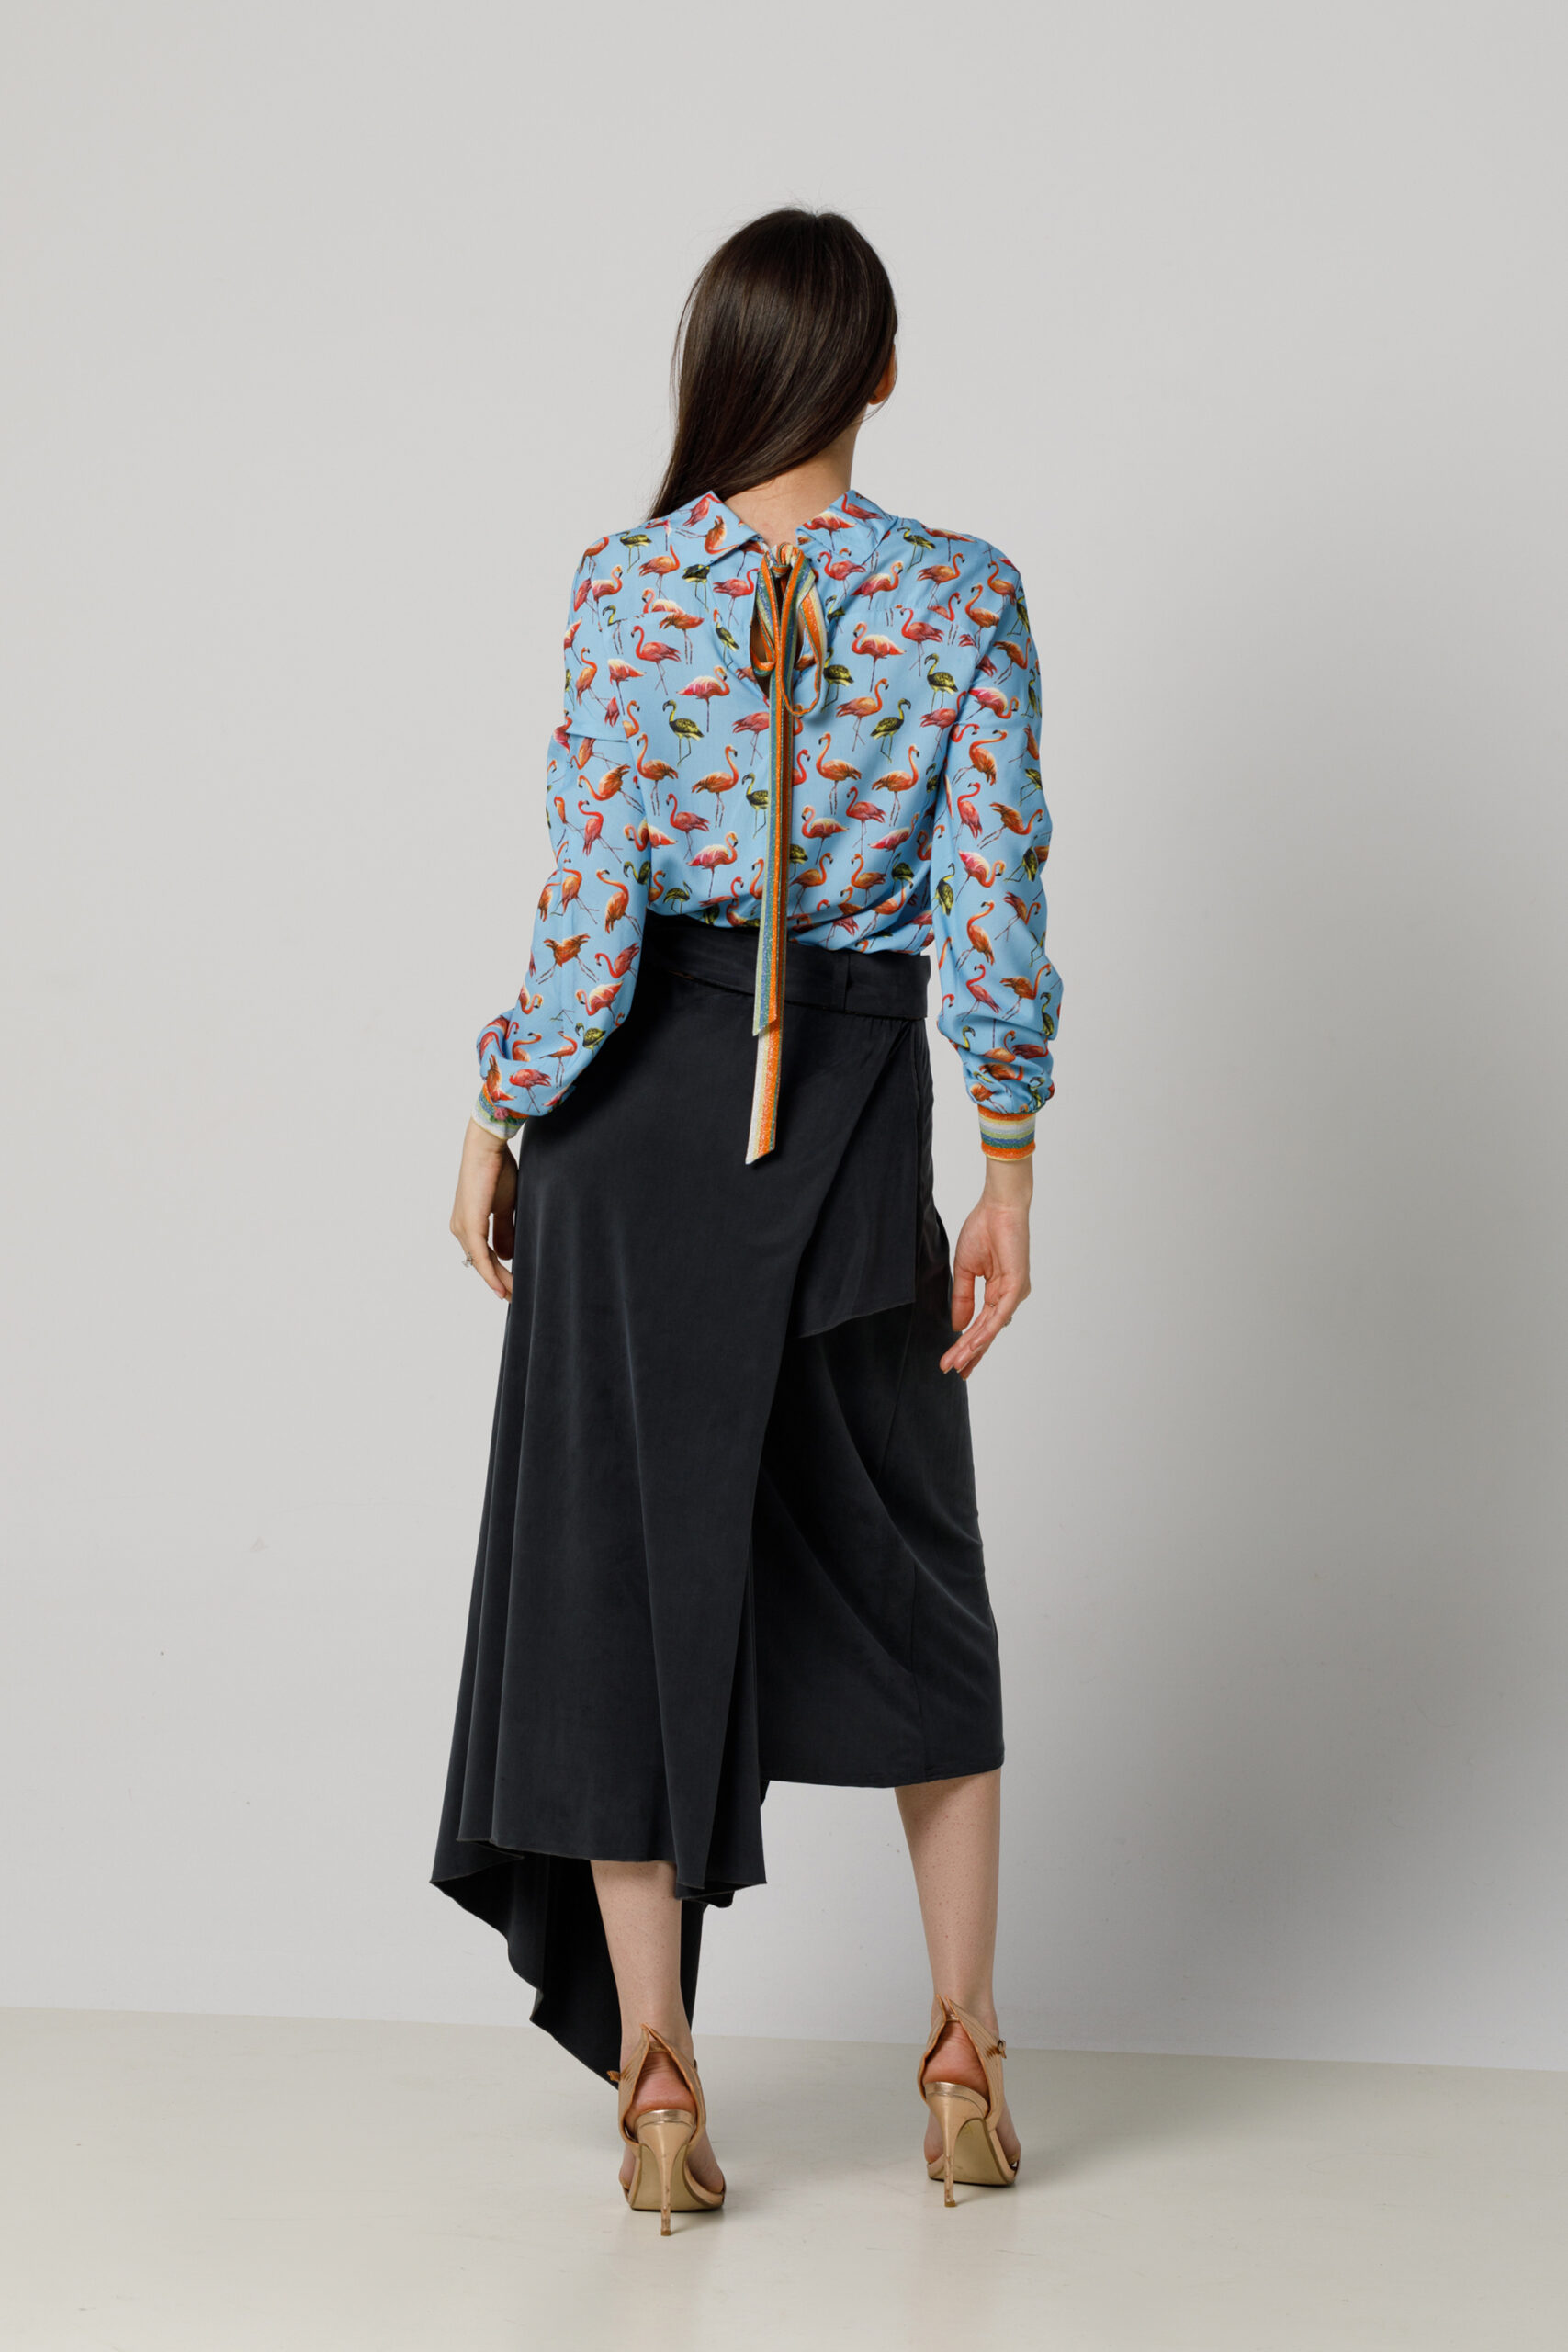 BETH casual gray lycra skirt. Natural fabrics, original design, handmade embroidery